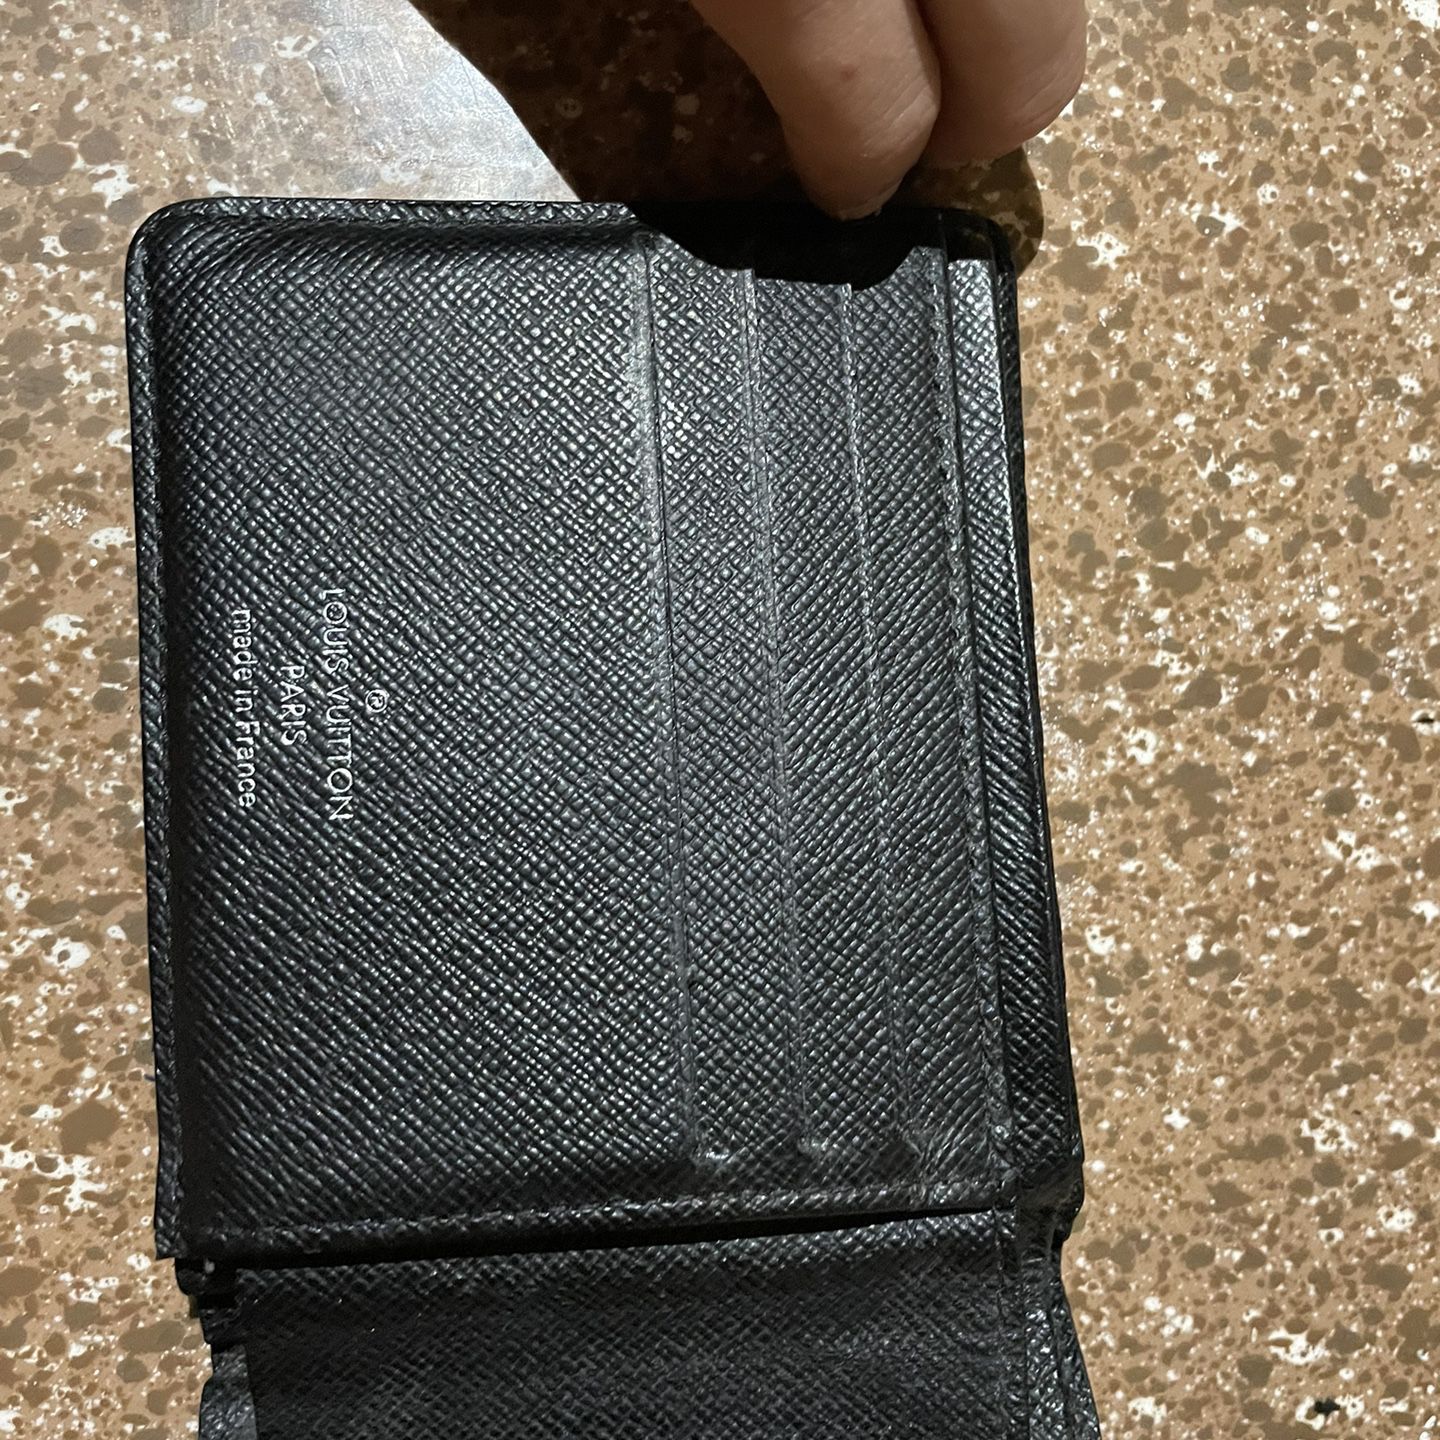 Louis Vuitton Brown Wallet 60017 19x10cm for Sale in Houston, TX - OfferUp